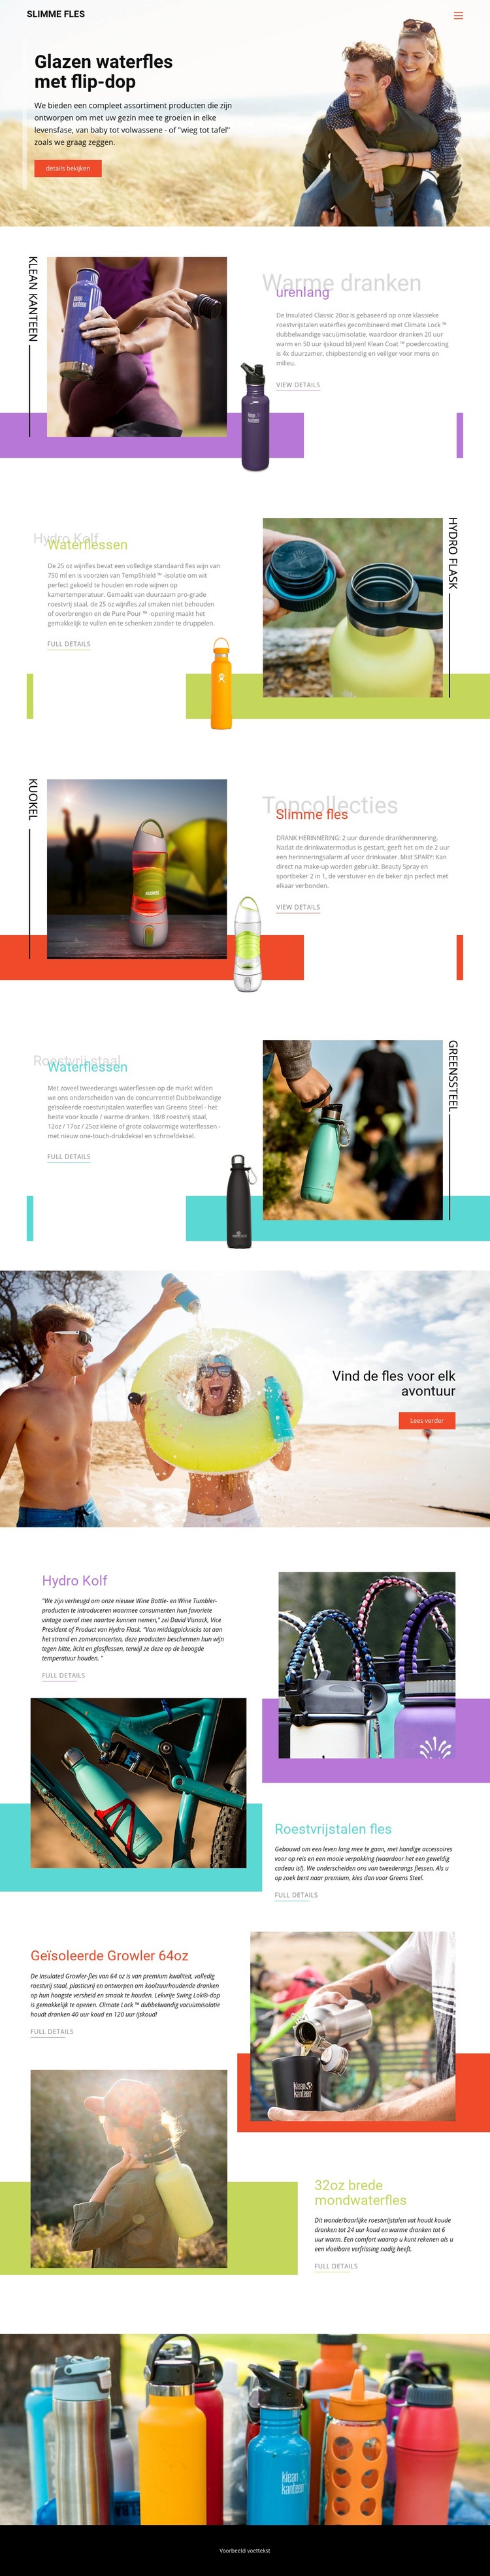 Waterflessen Website ontwerp